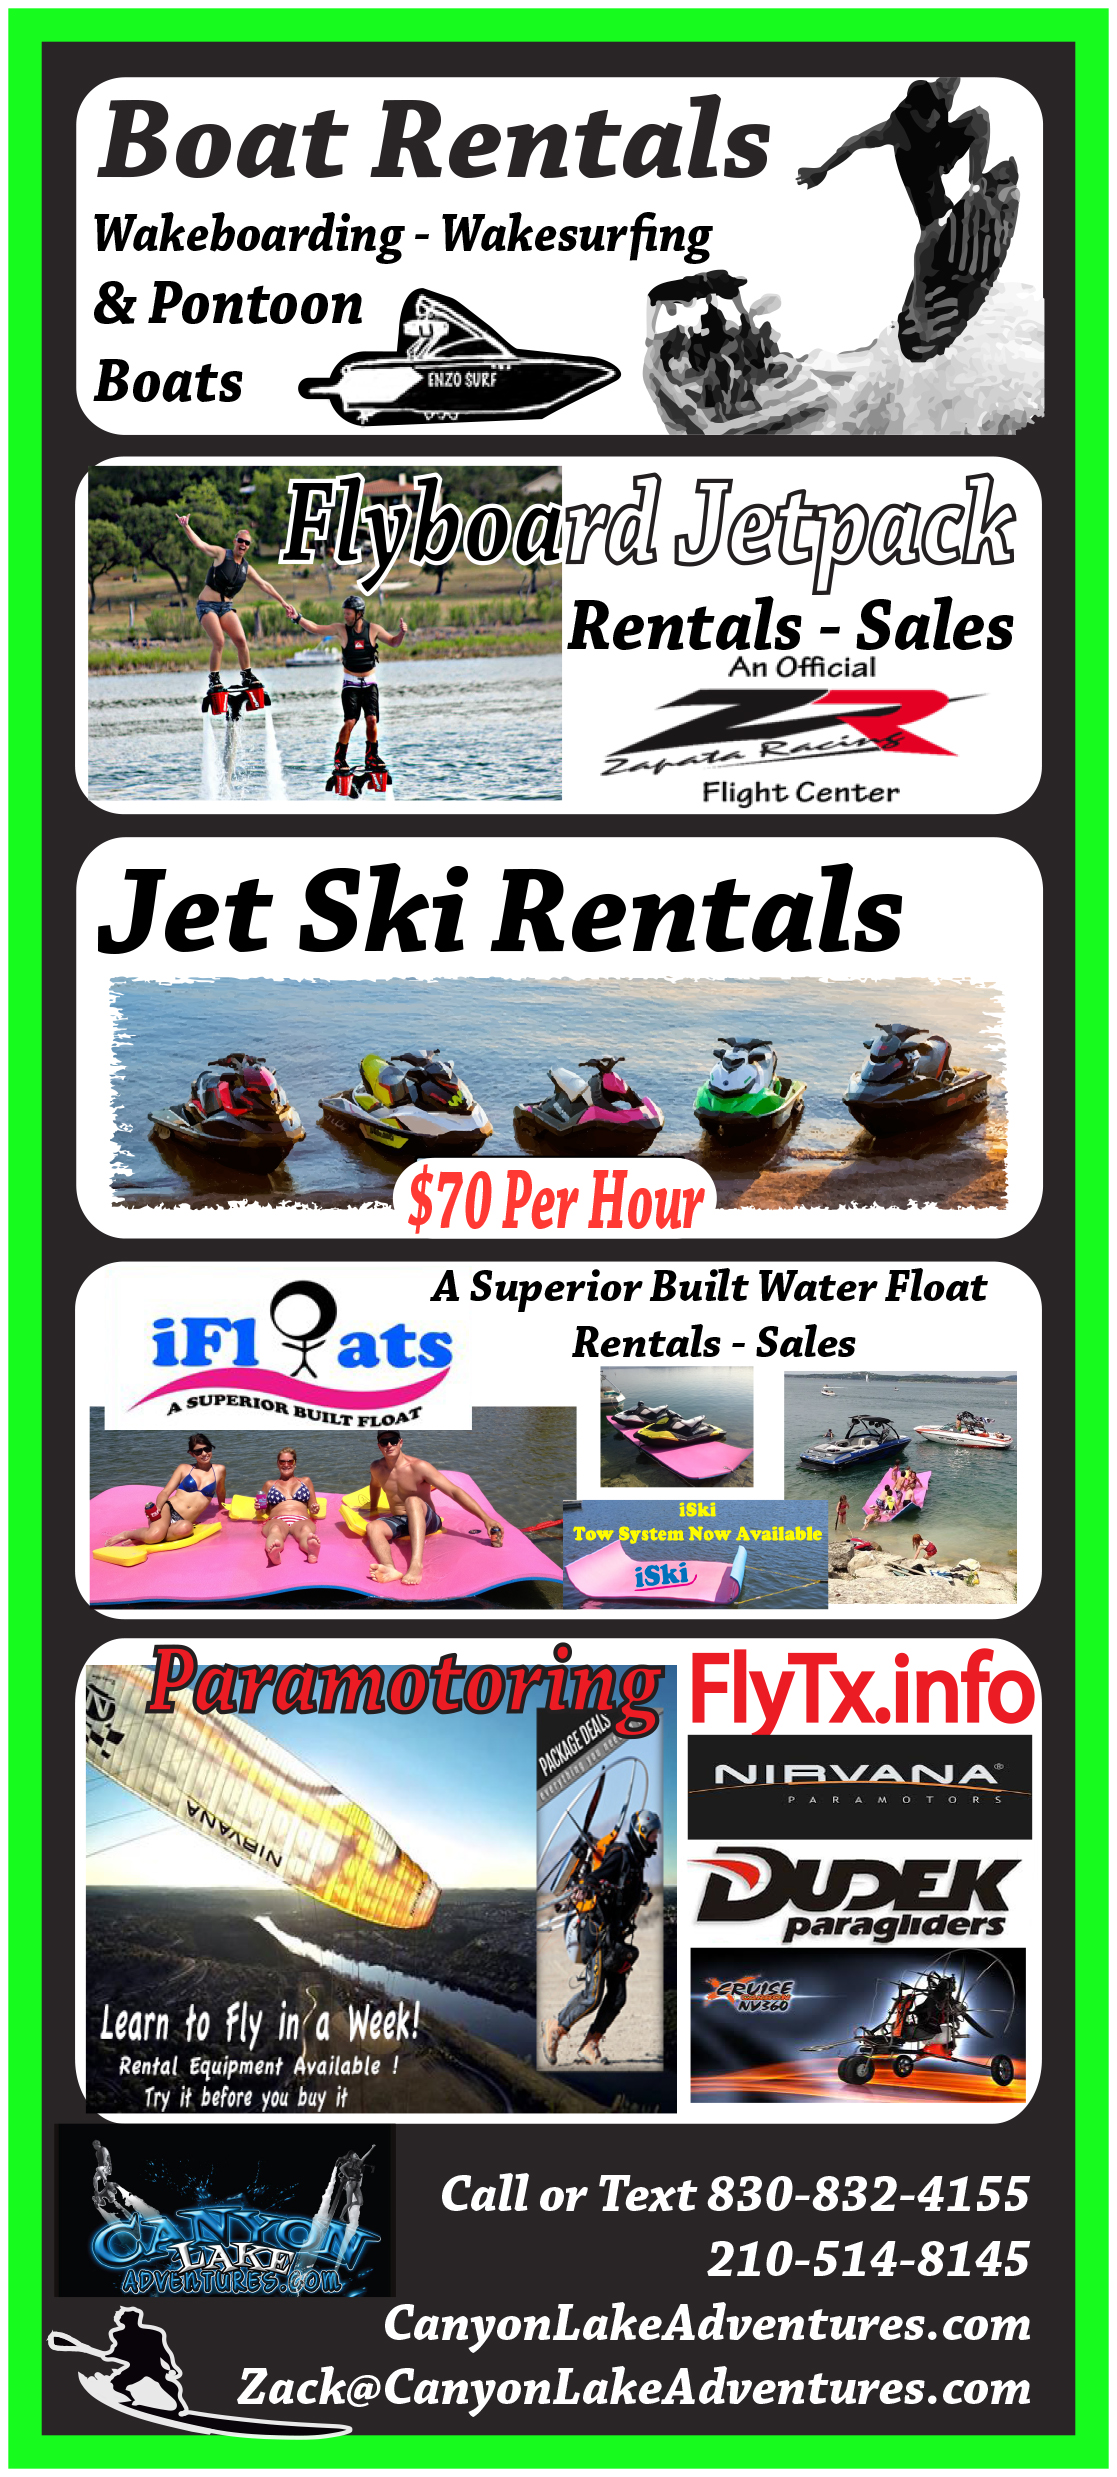 aquaboard  - flyboard jetpack rentals canyon lake